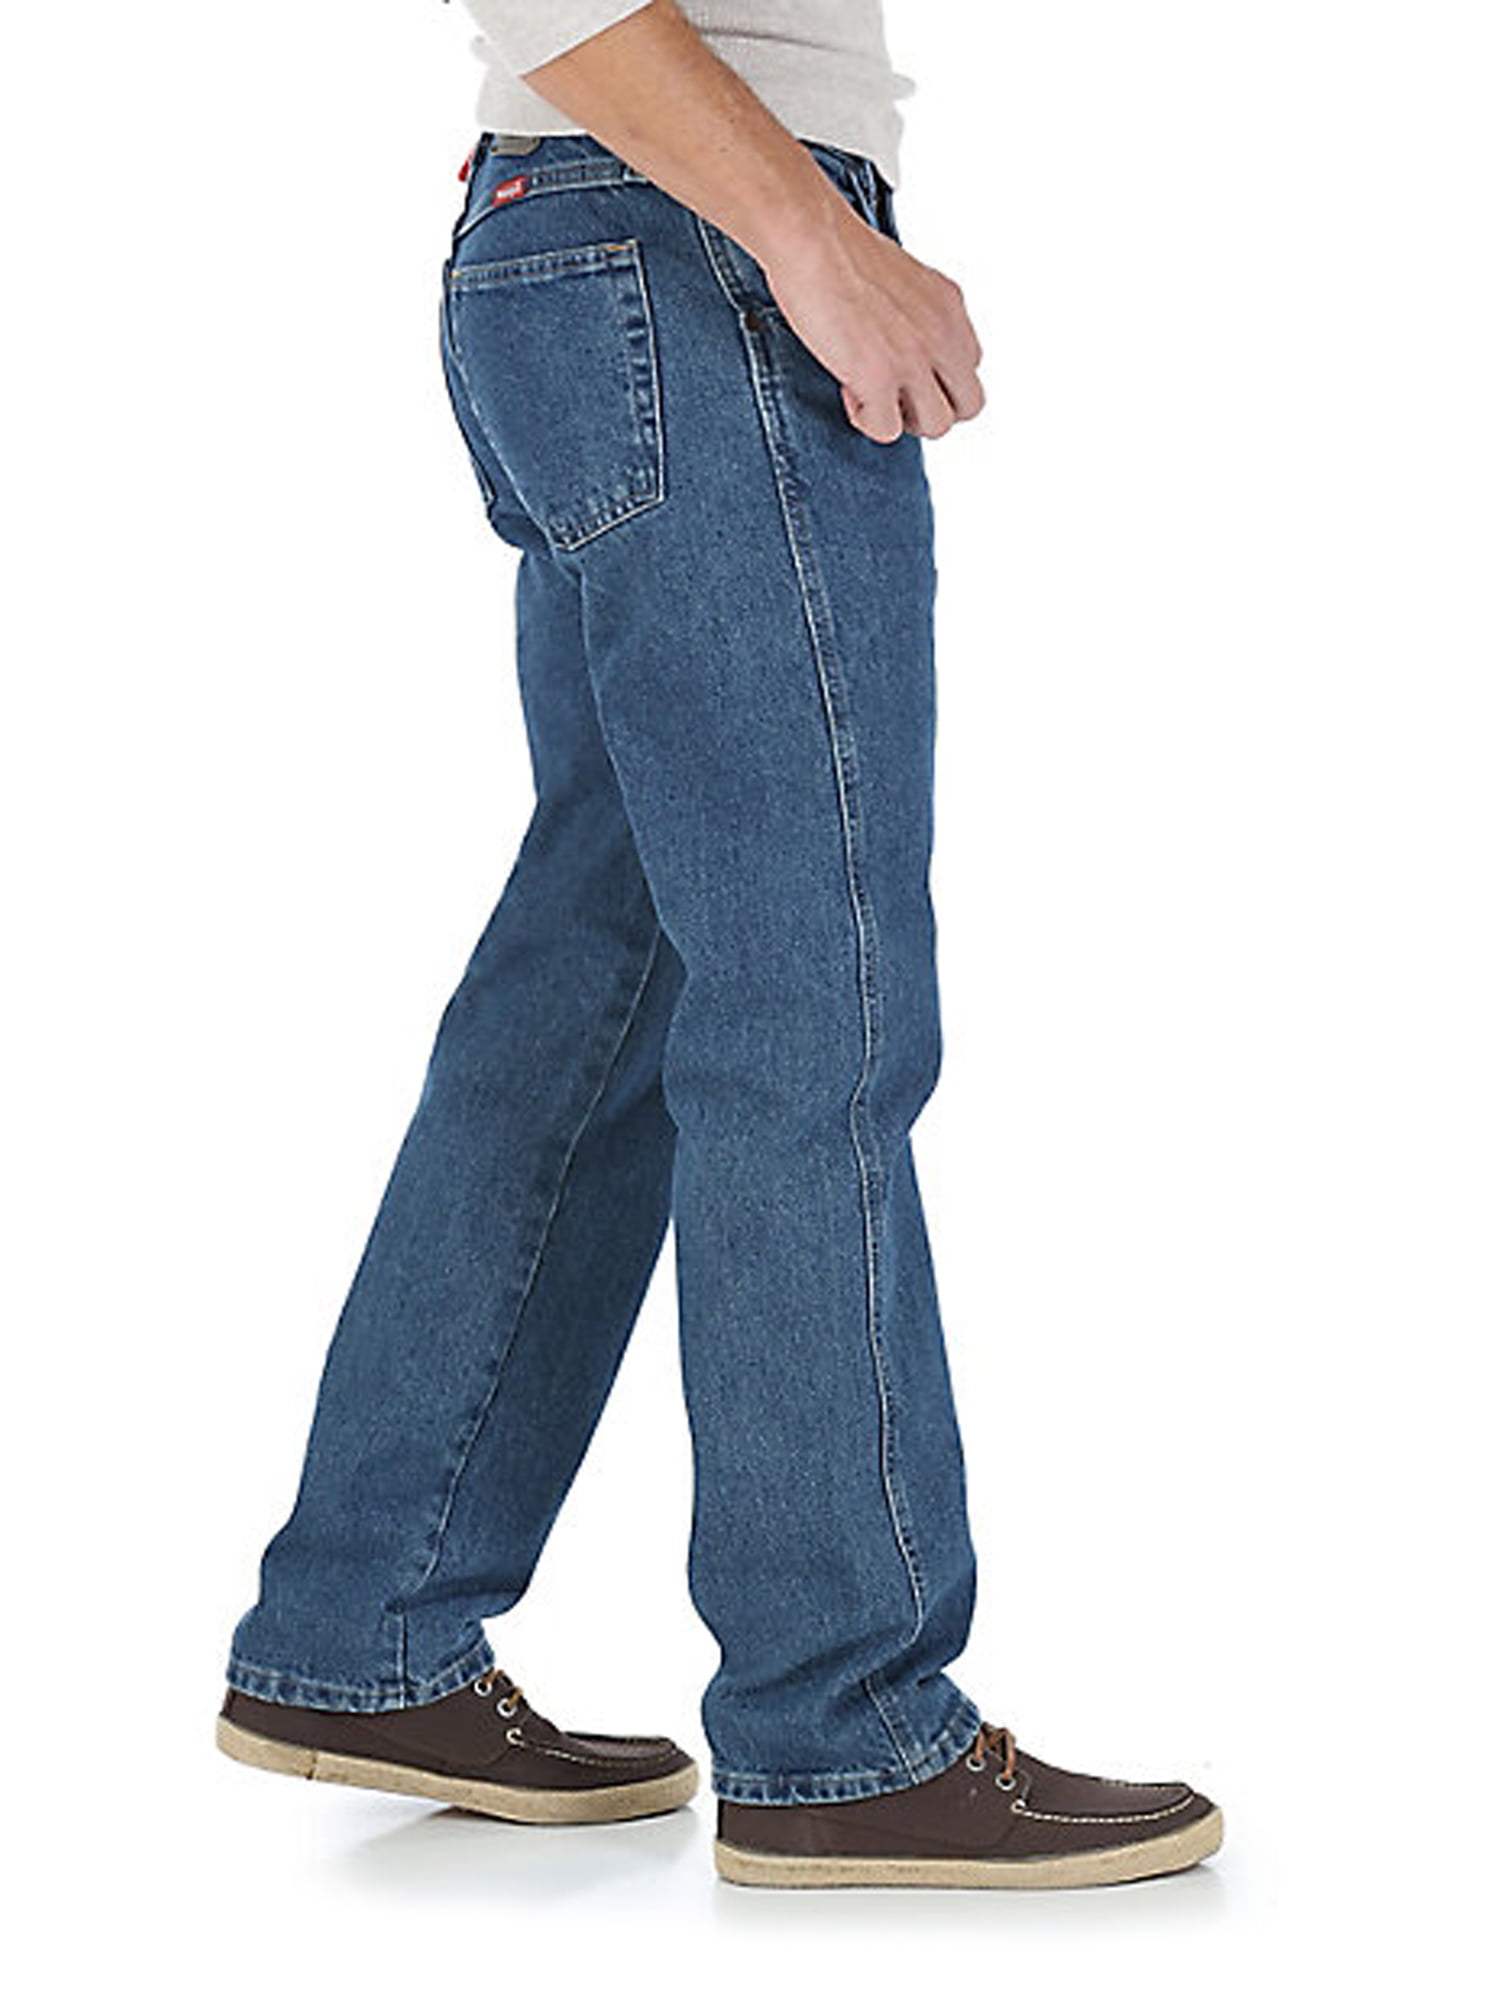 wrangler jeans usa sale